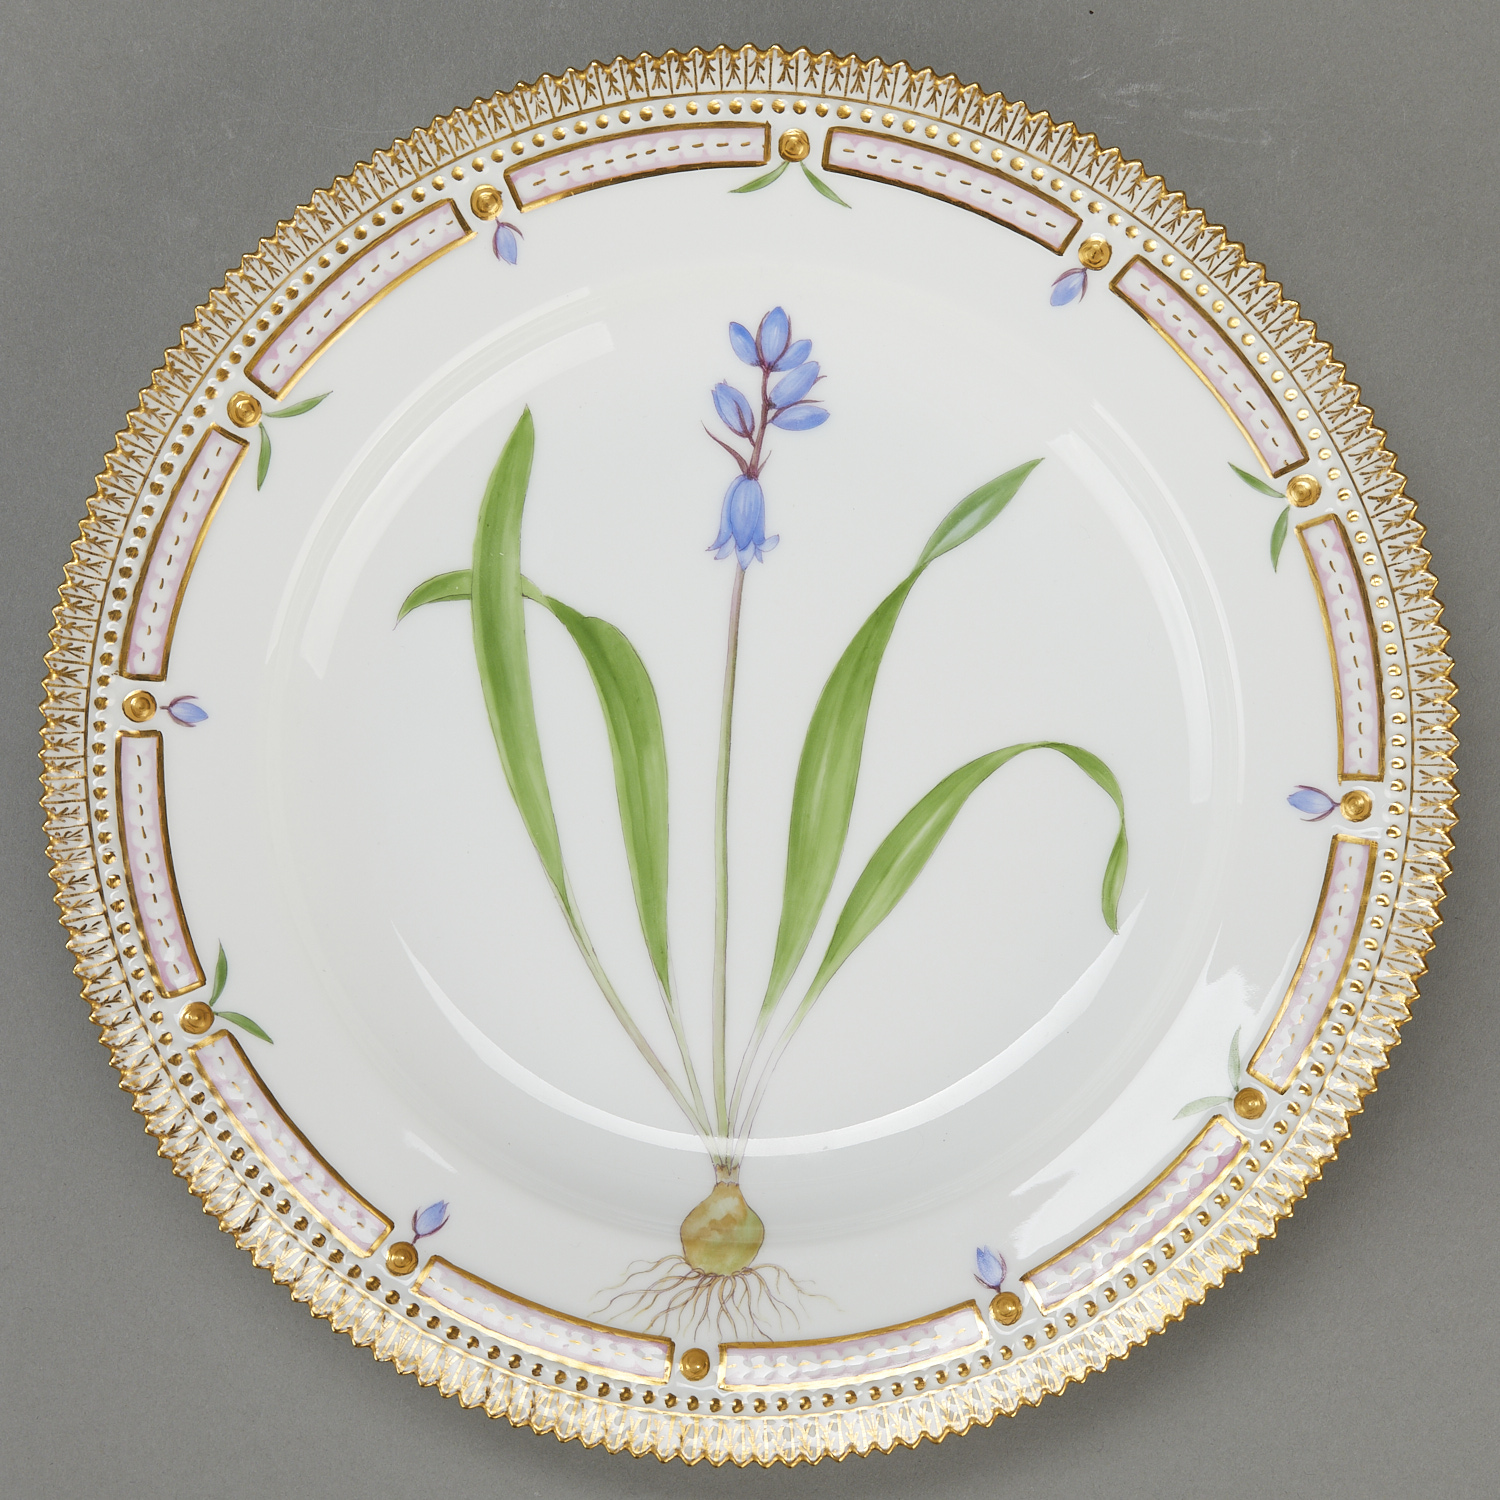 Set 11 Flora Danica Luncheon Plates - Image 16 of 22